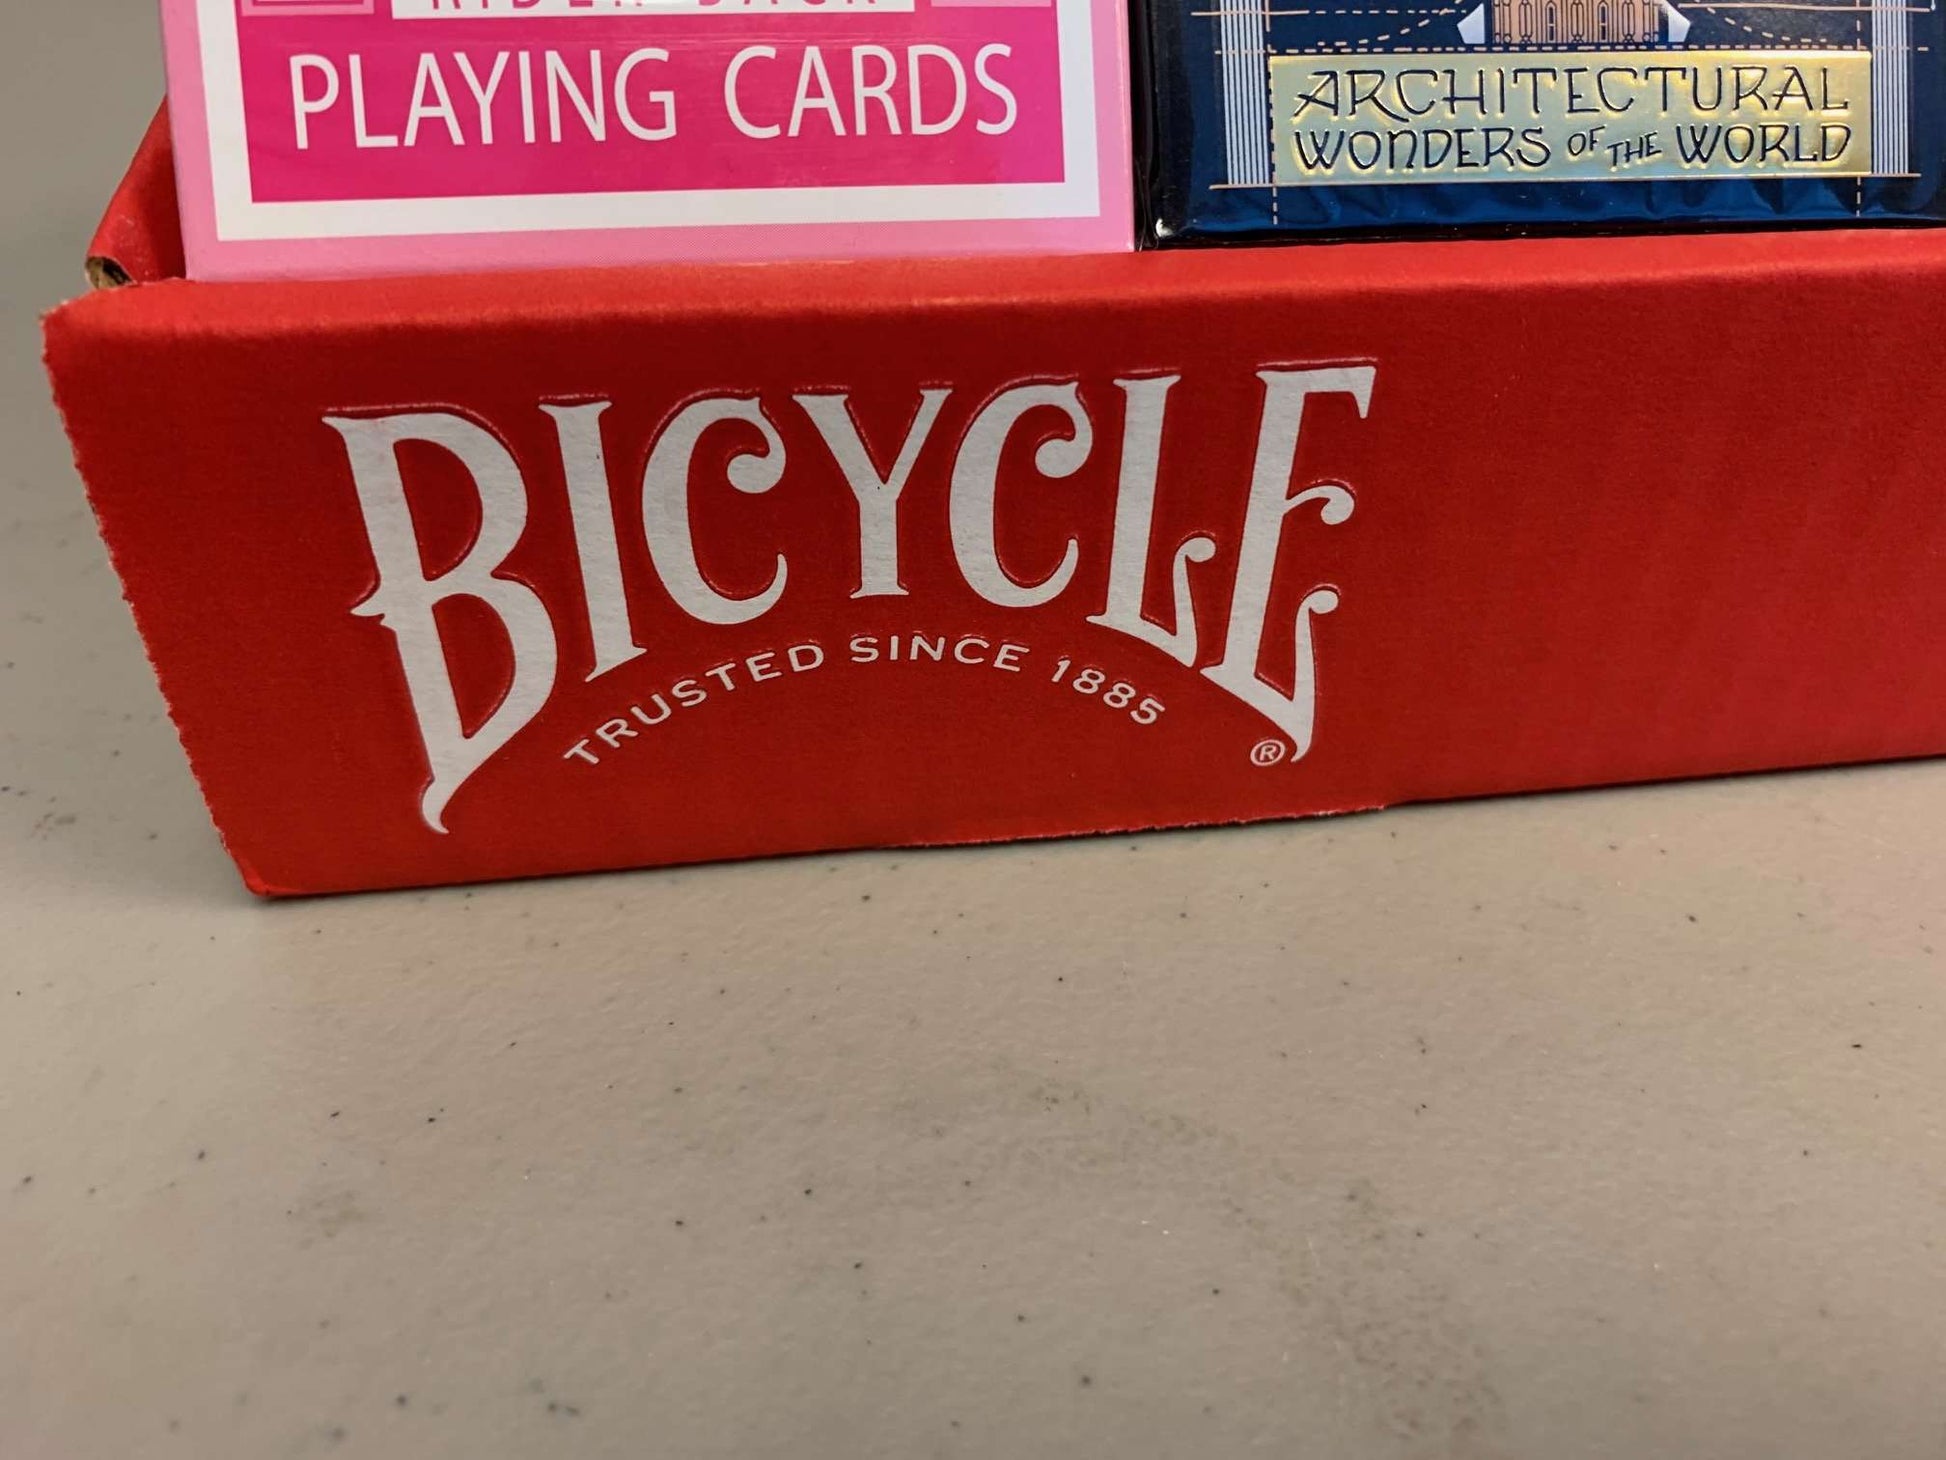 PlayingCardDecks.com-24 Mystery Bicycle Decks With Display